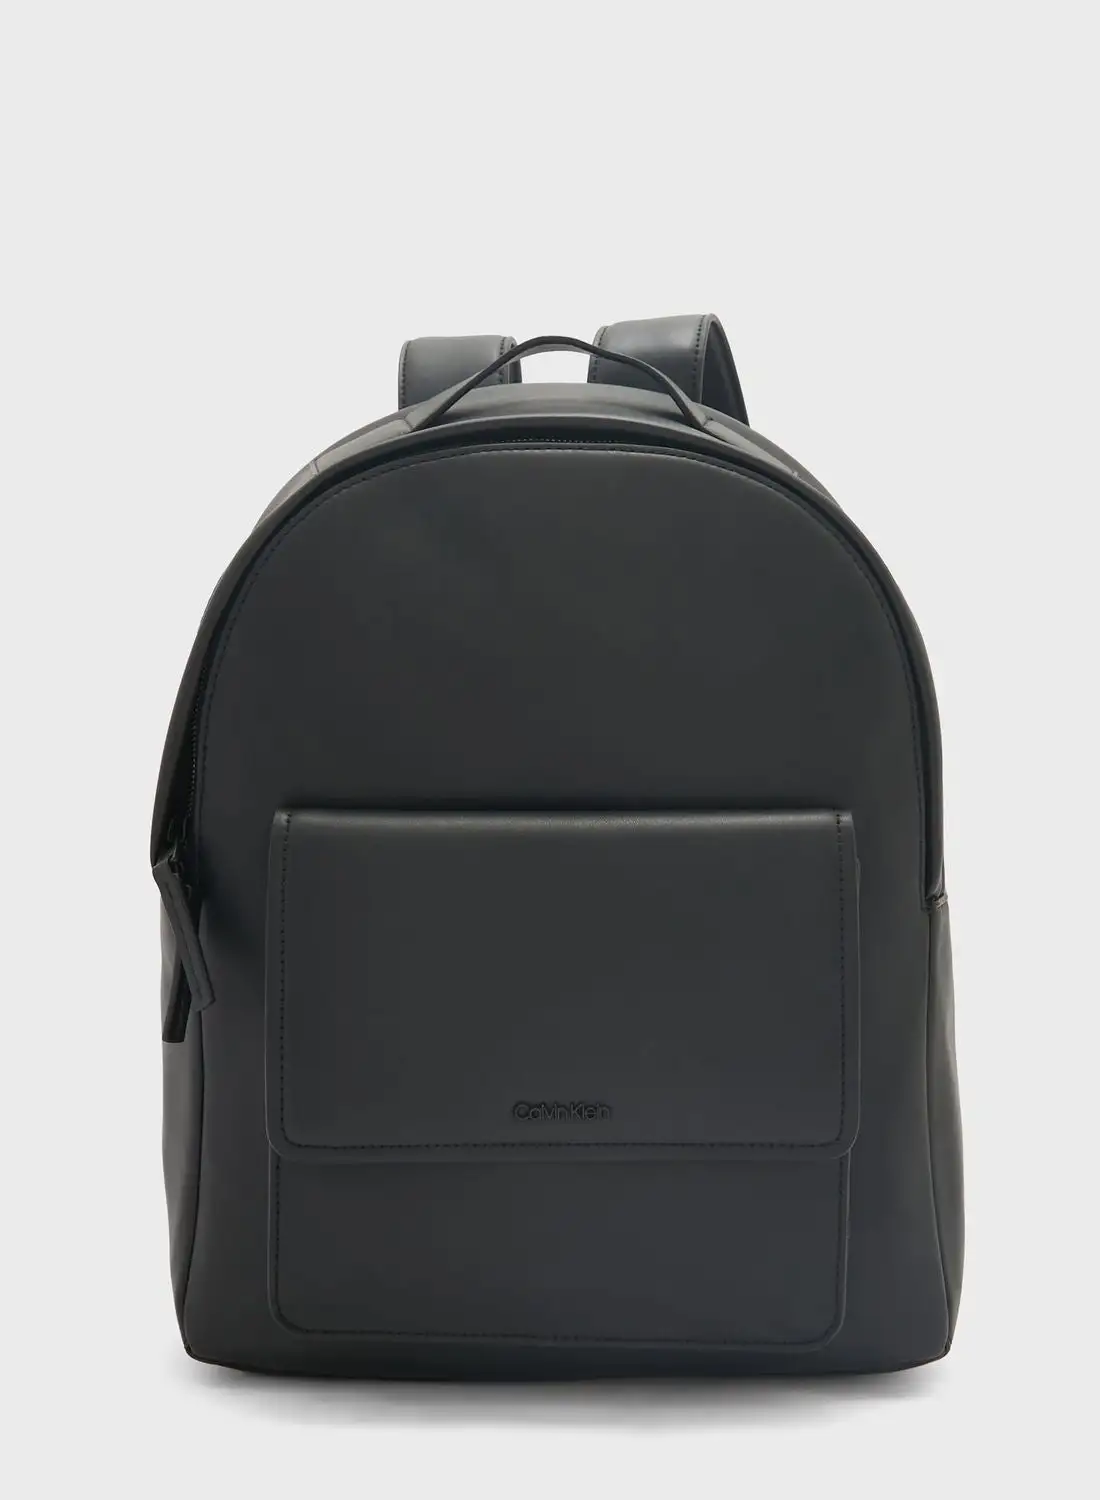 CALVIN KLEIN Essential Backpack